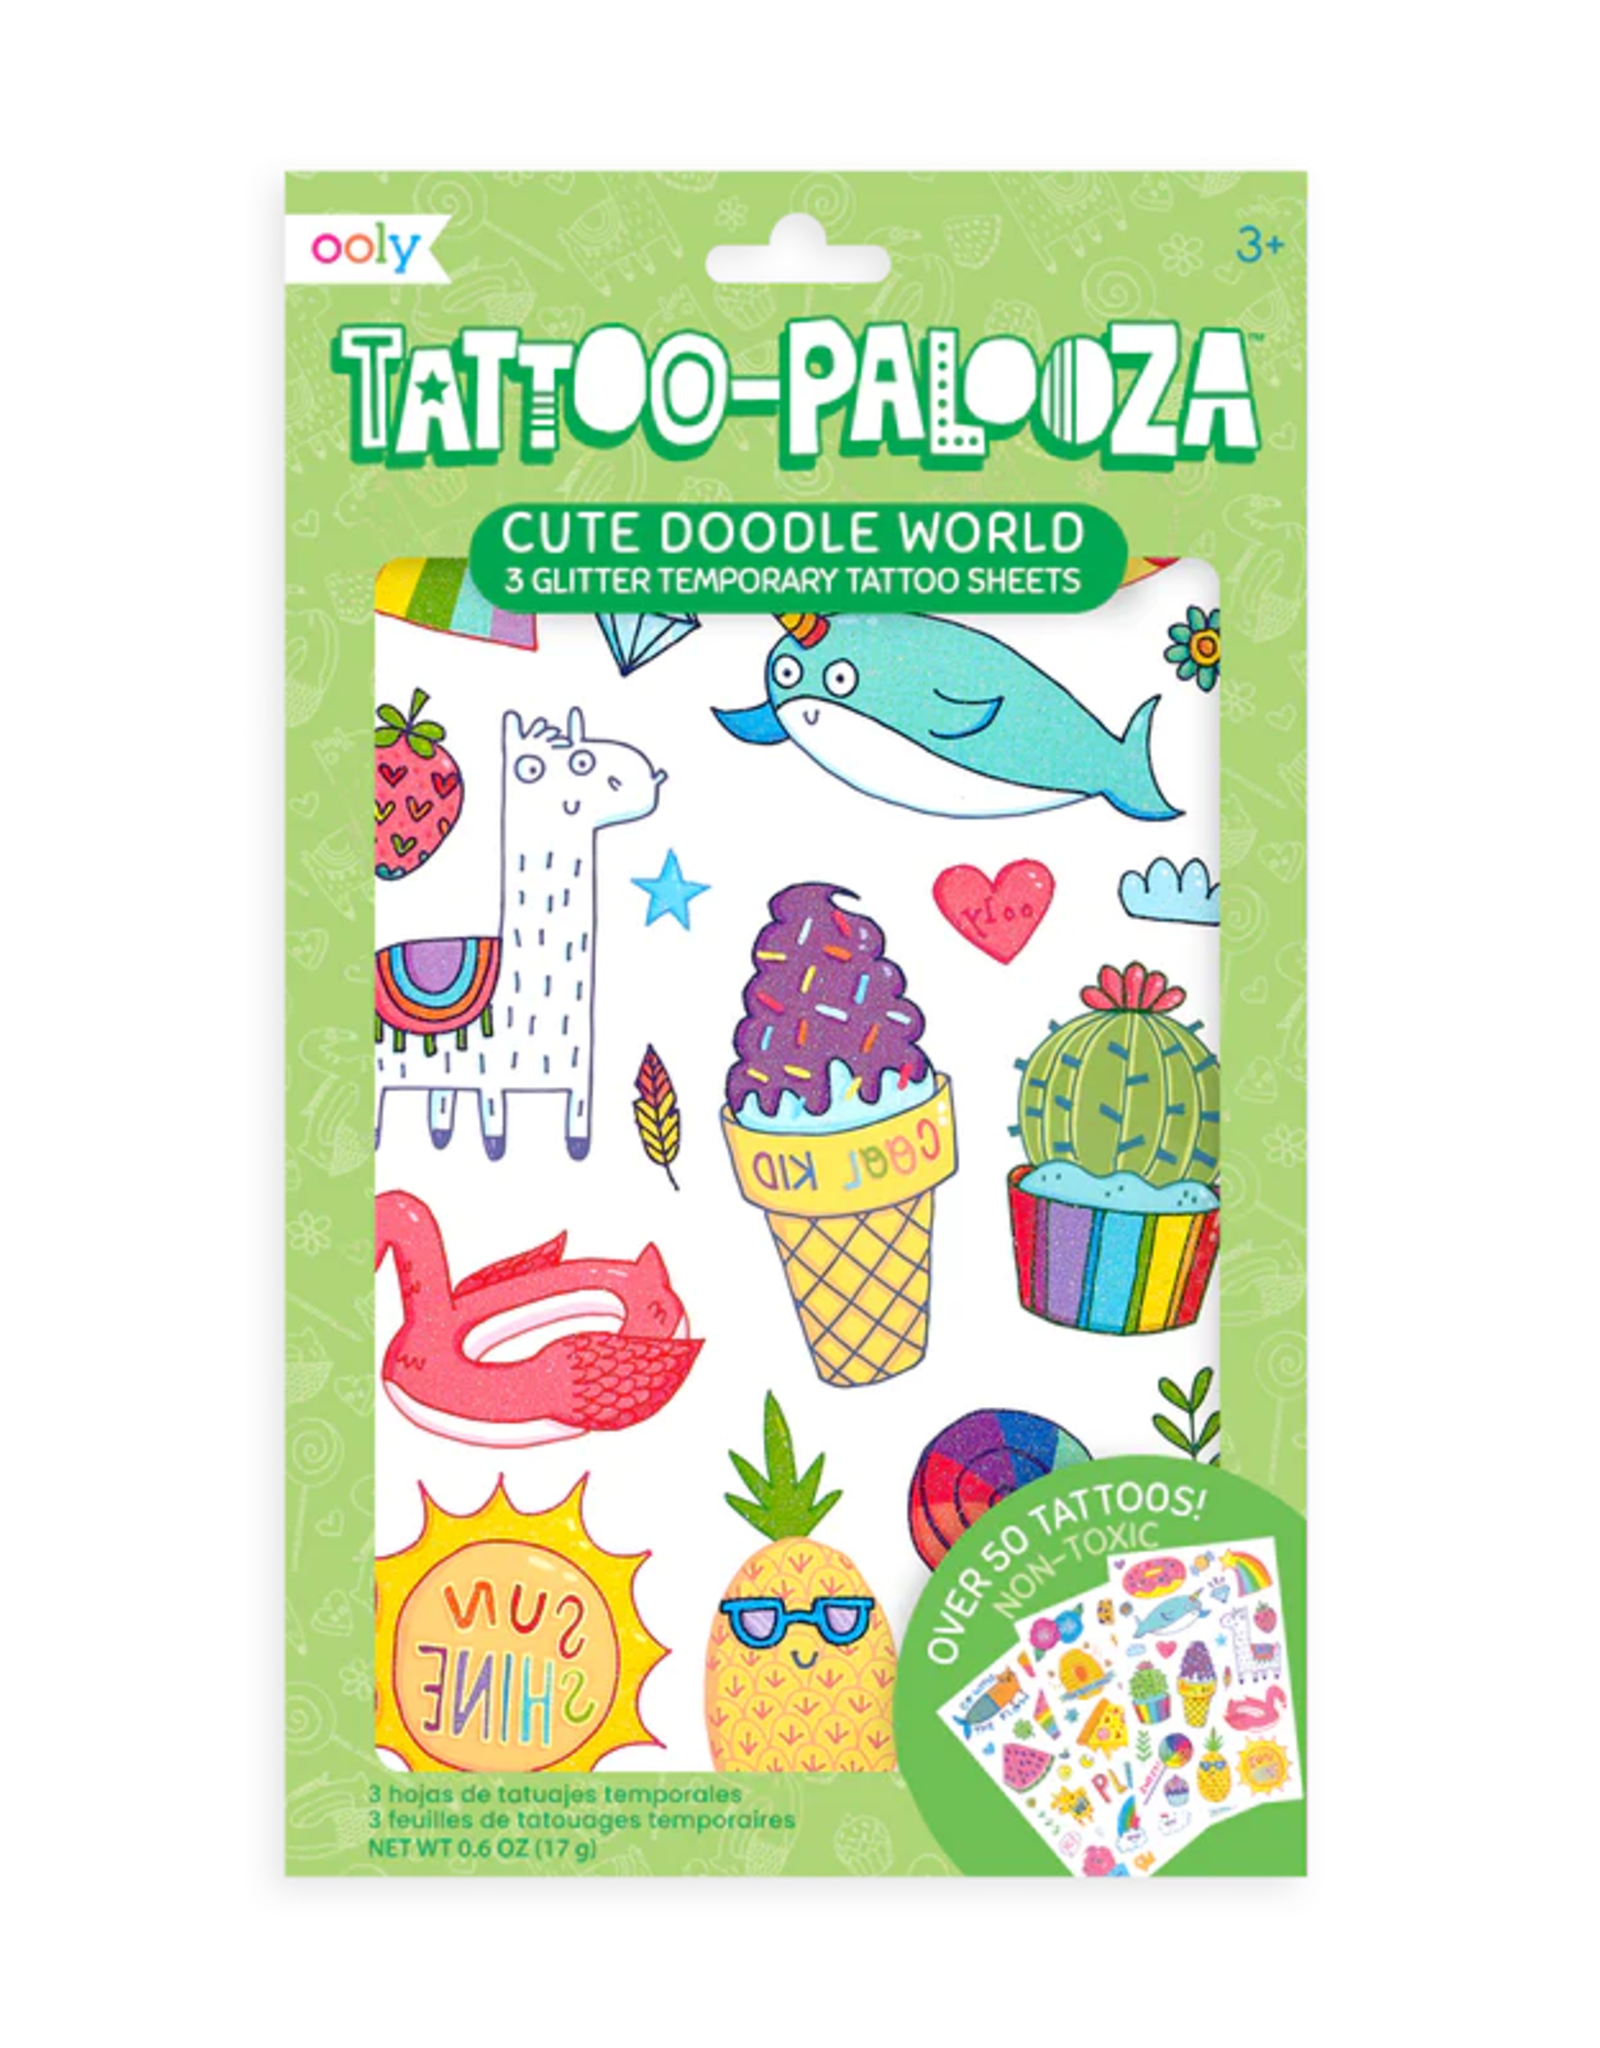 Ooly Tattoo-Palooza Cute Doodle World